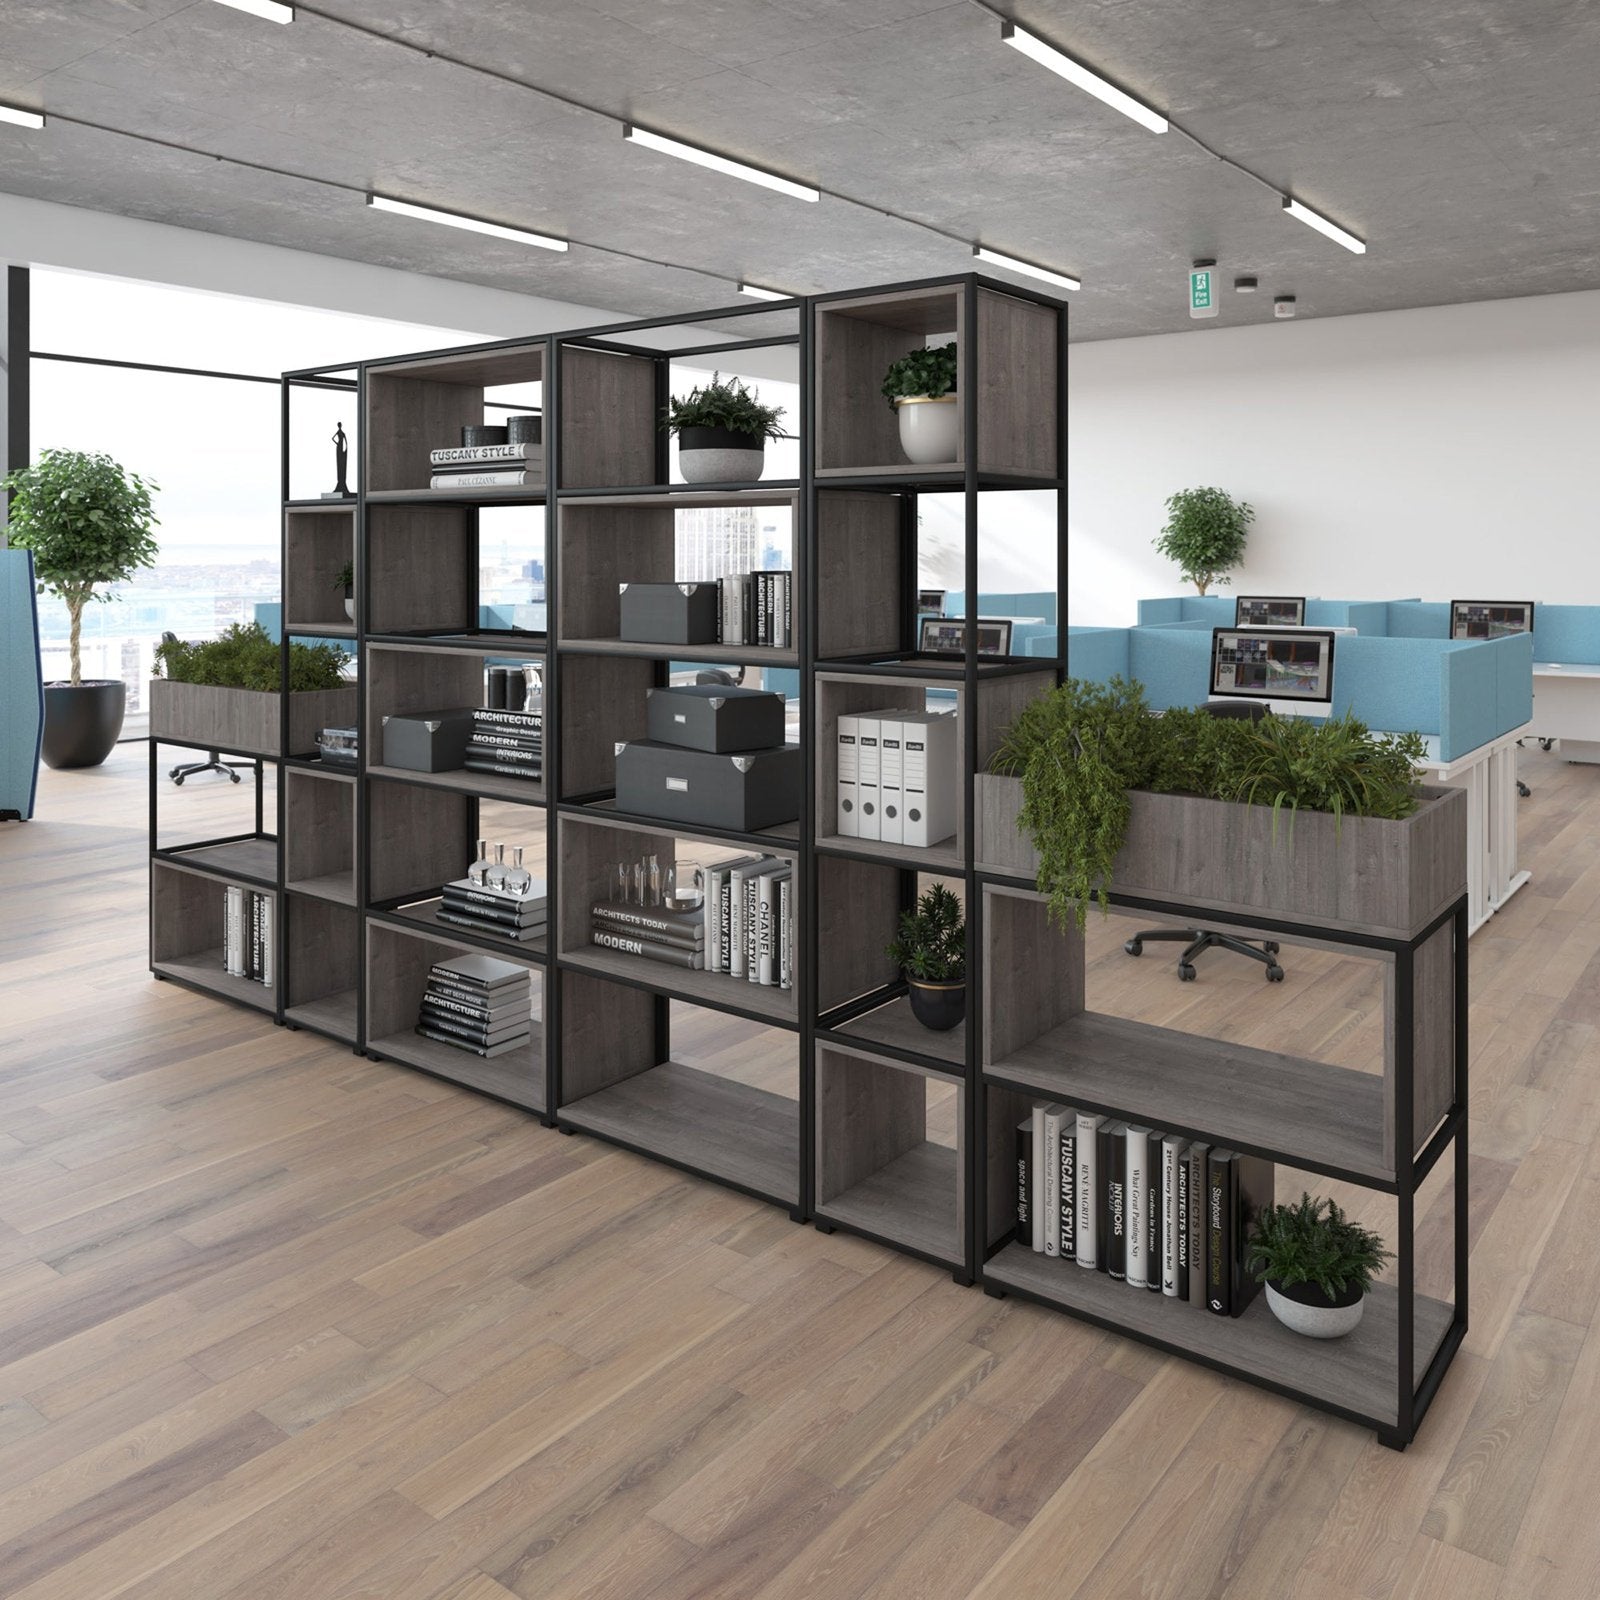 Flux modular storage single wooden cubby shelf - Office Products Online